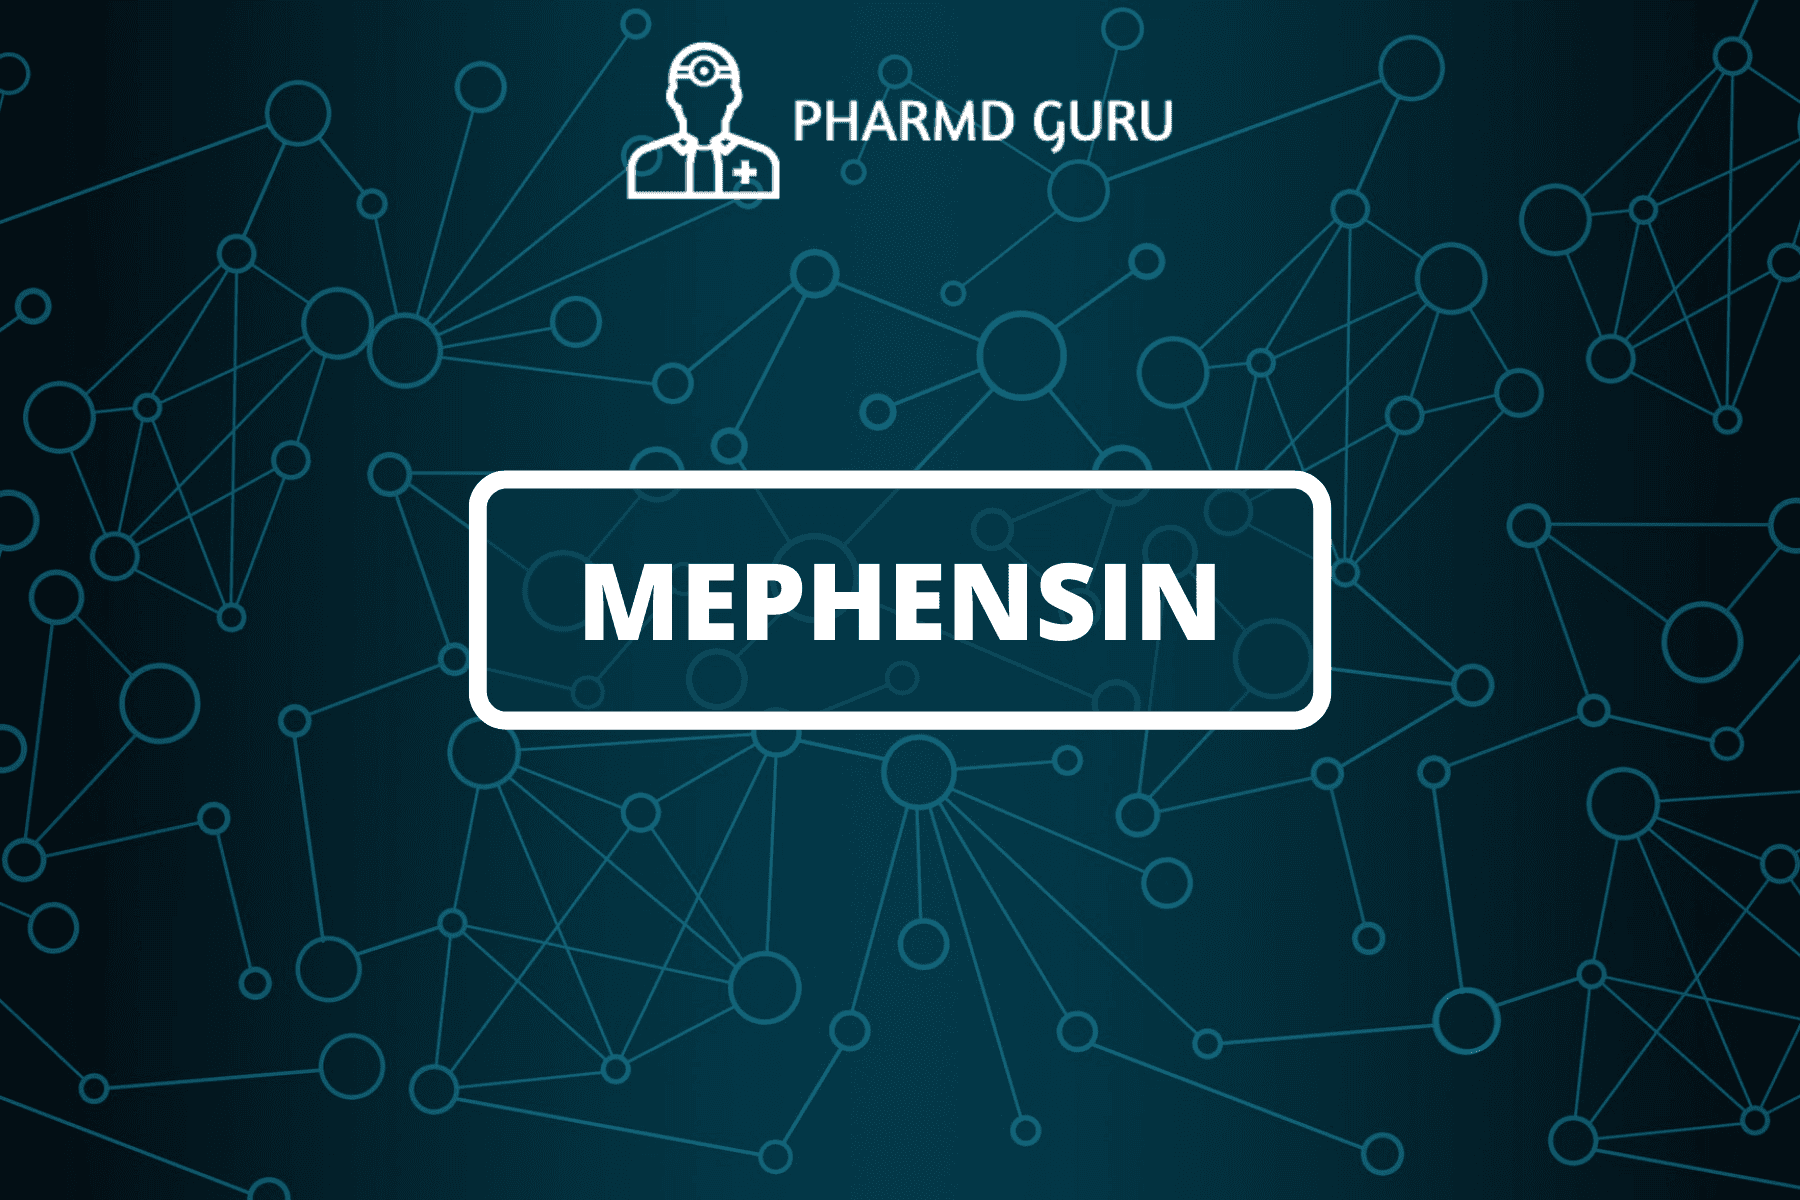 61. MEPHENESIN - PHARMD GURU